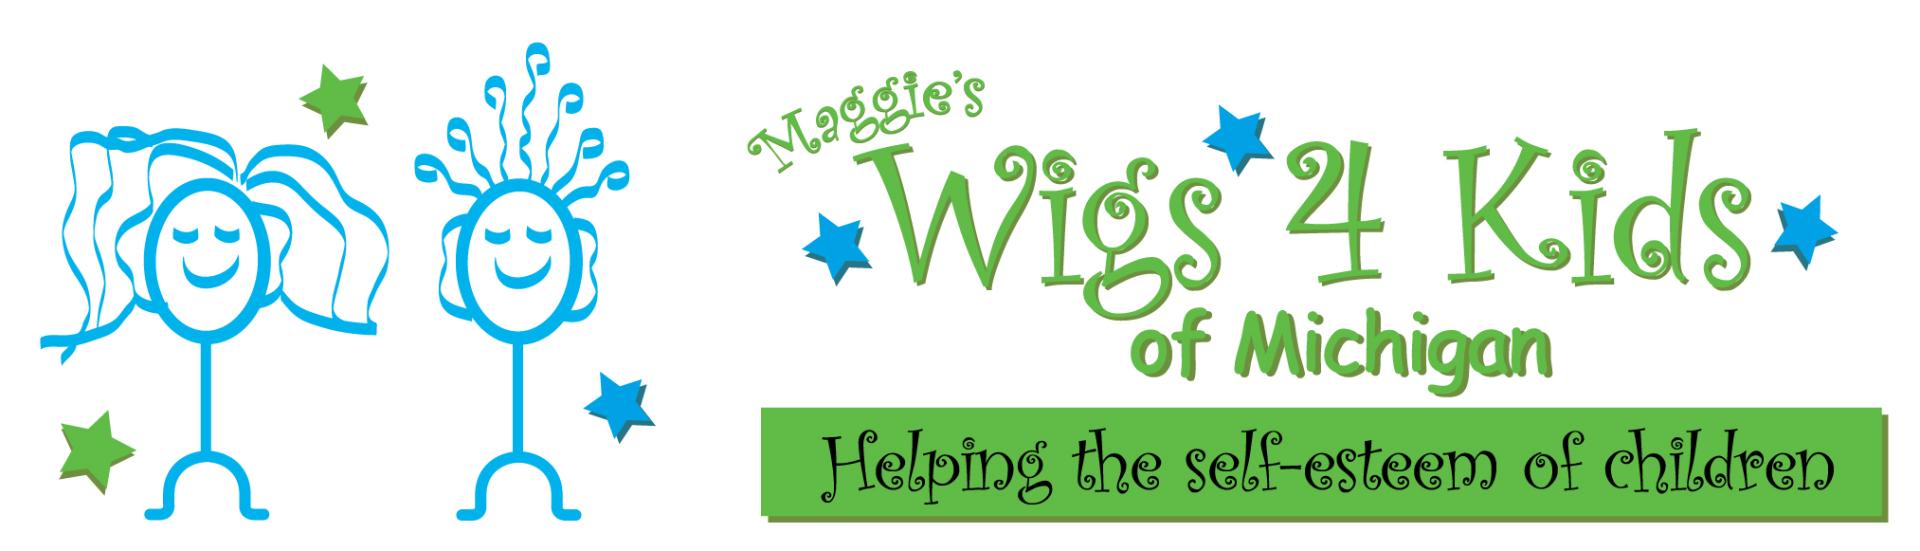 Maggie's Wigs 4 Kids of Michigan logo